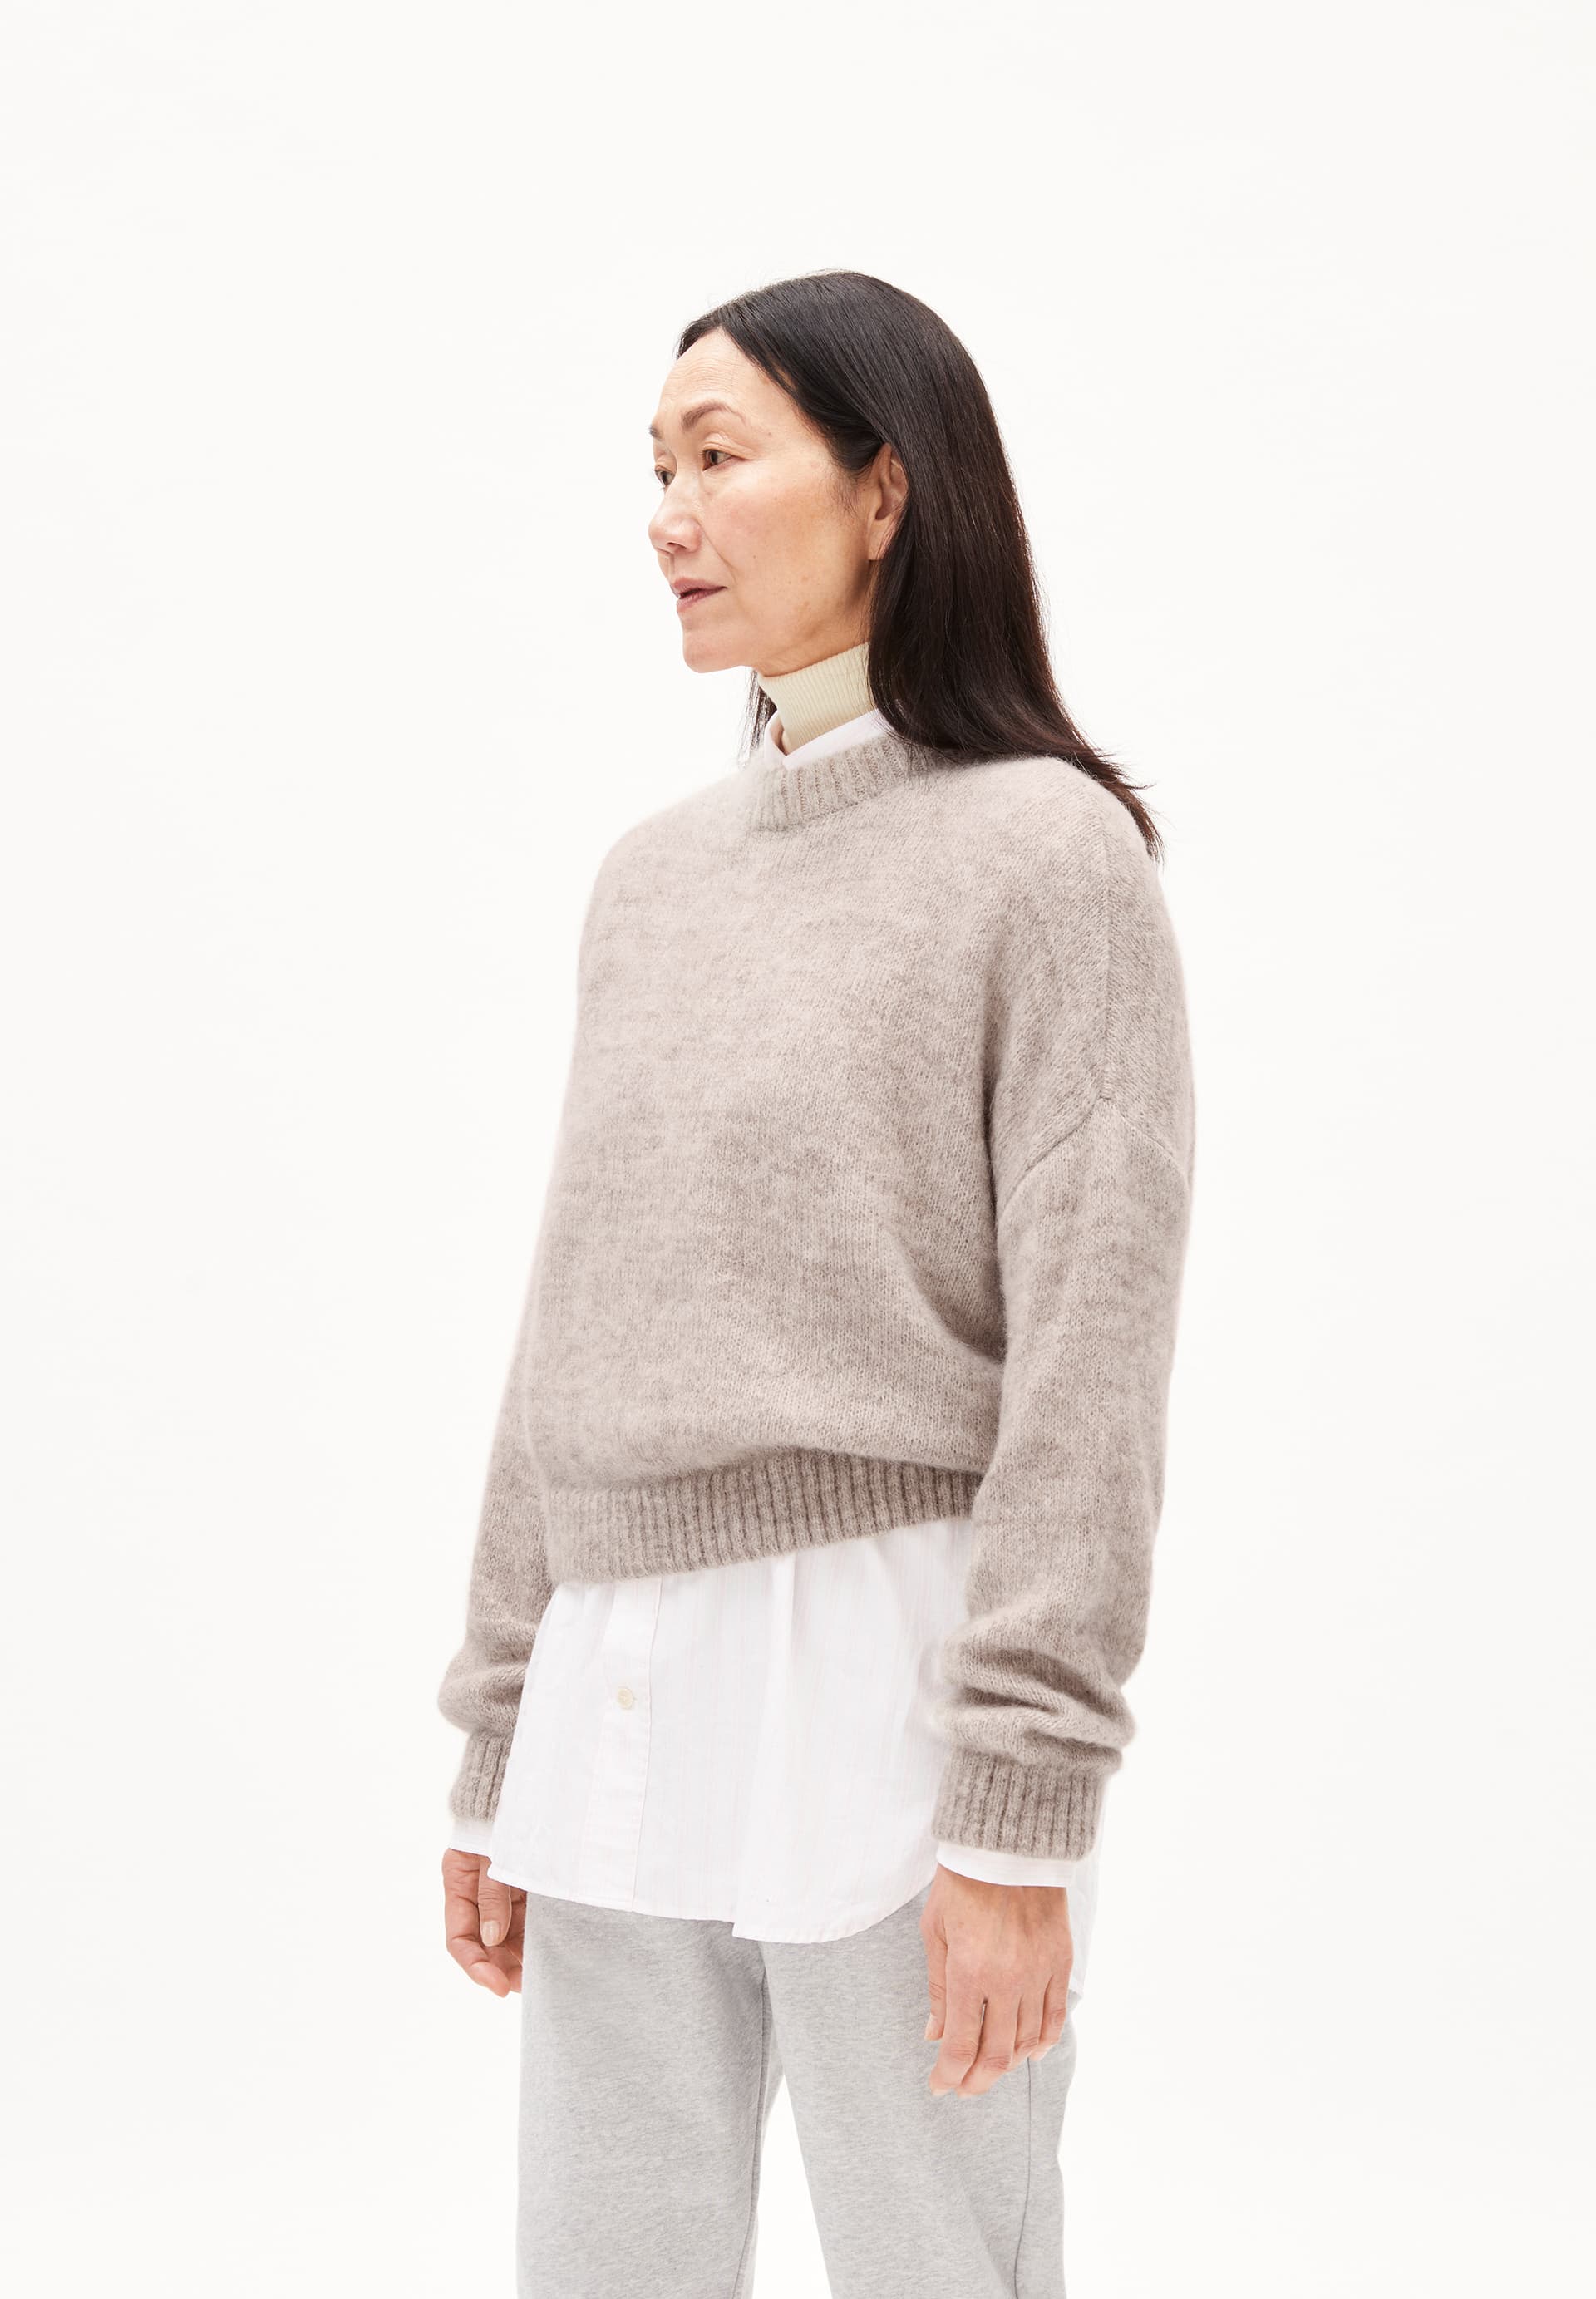 SURI INARAA Sweater Oversized Fit made of Alpaca Wool Mix